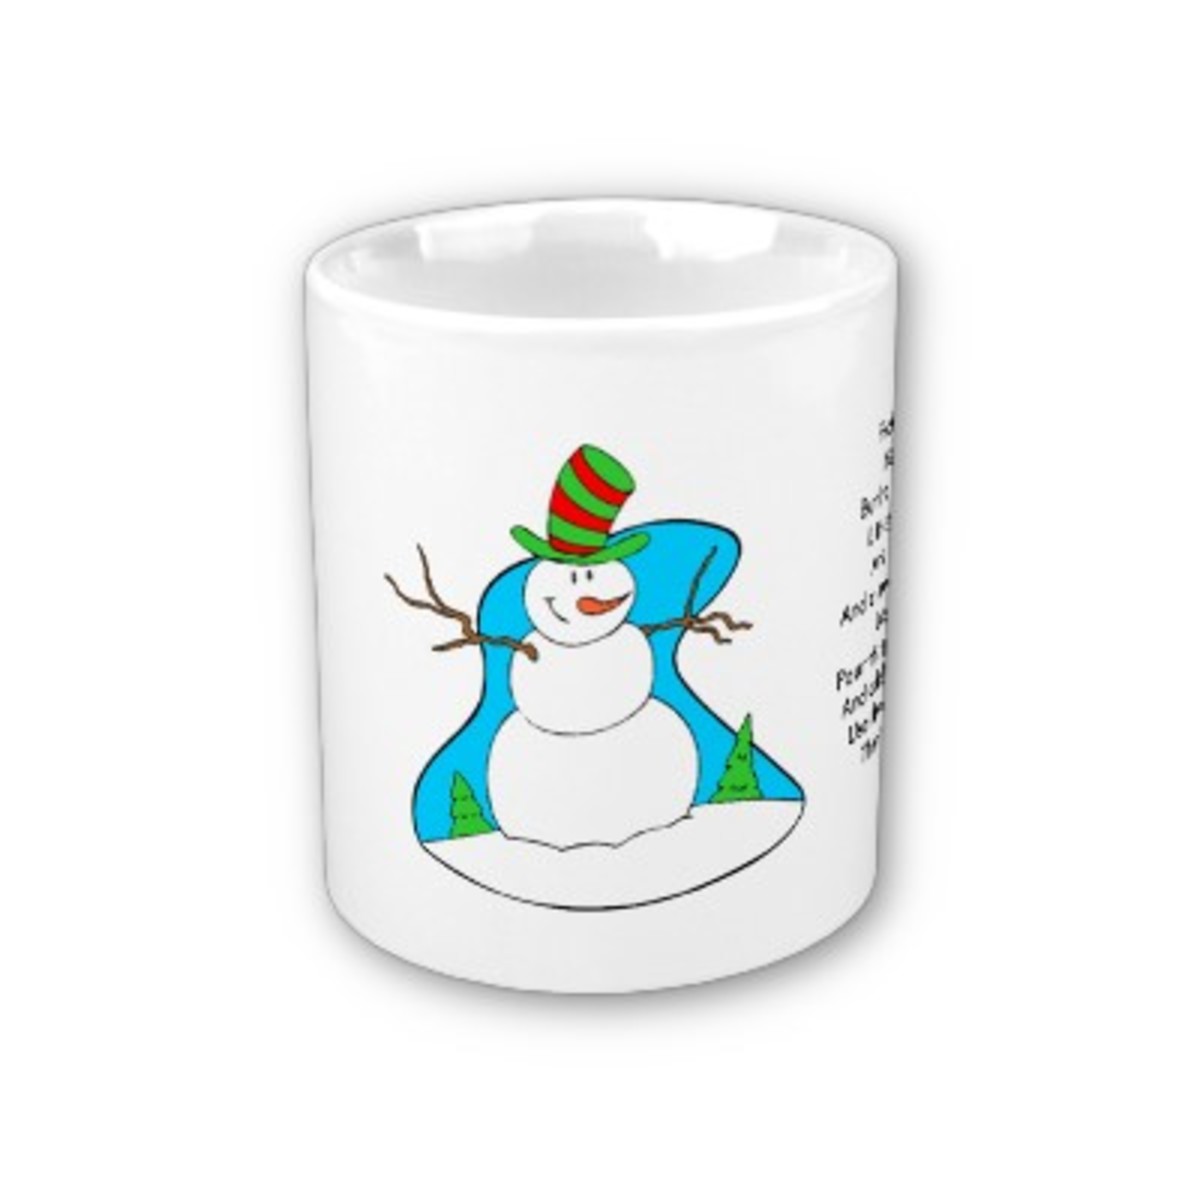 Snowman soup poem mug